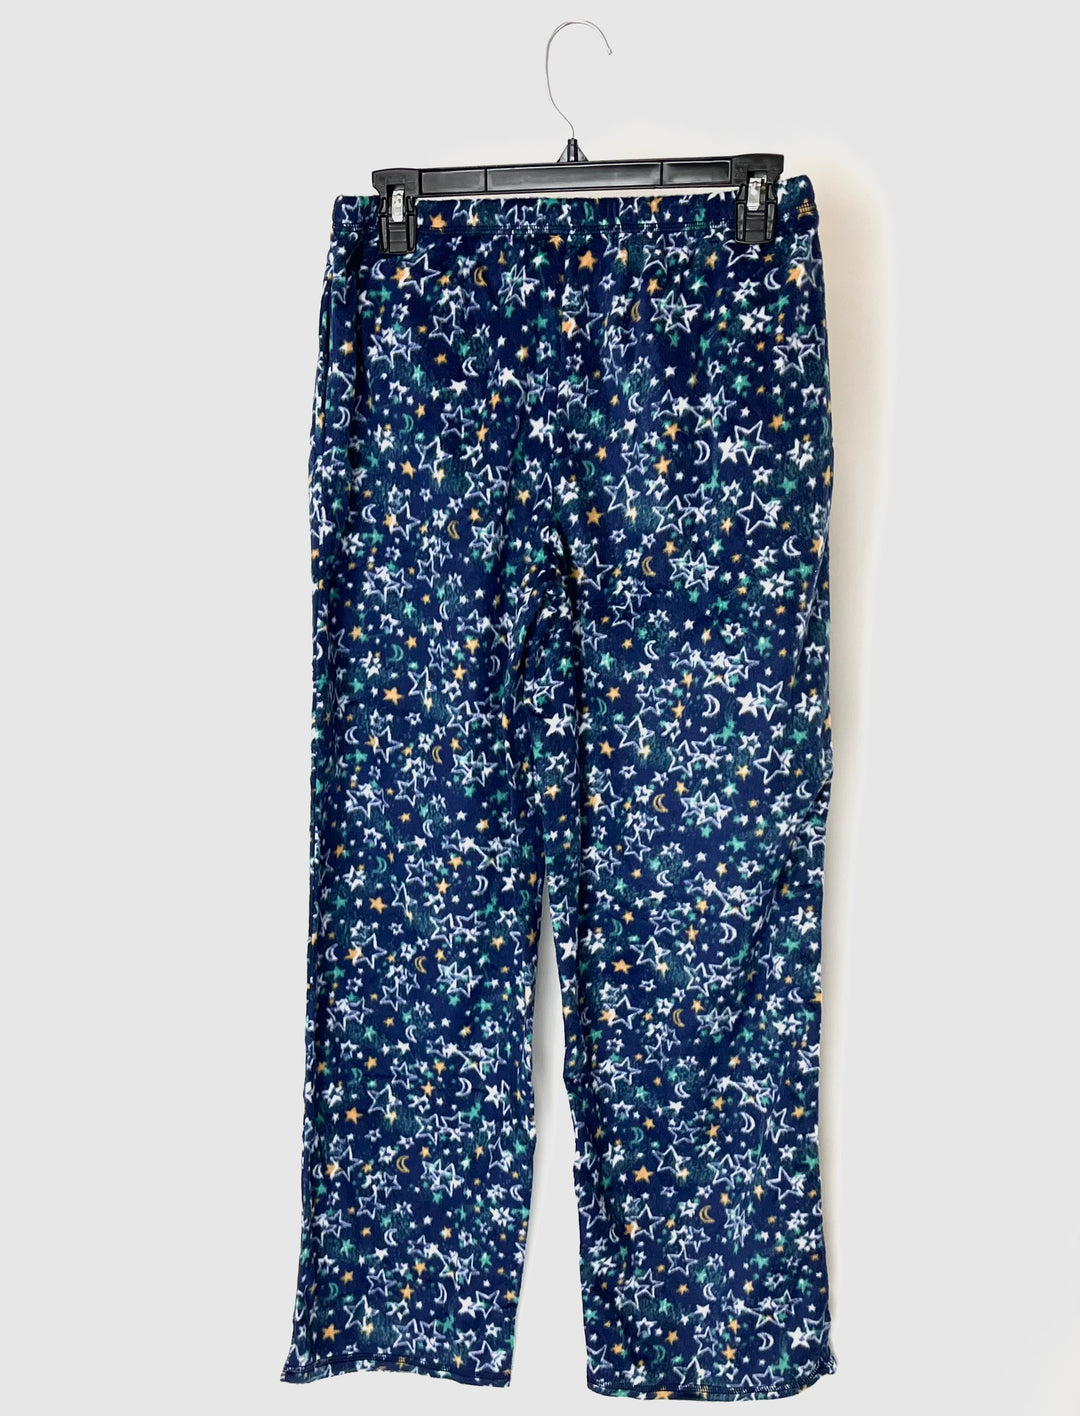 Navy Blue Star Print Pajama Set - Size 4/6